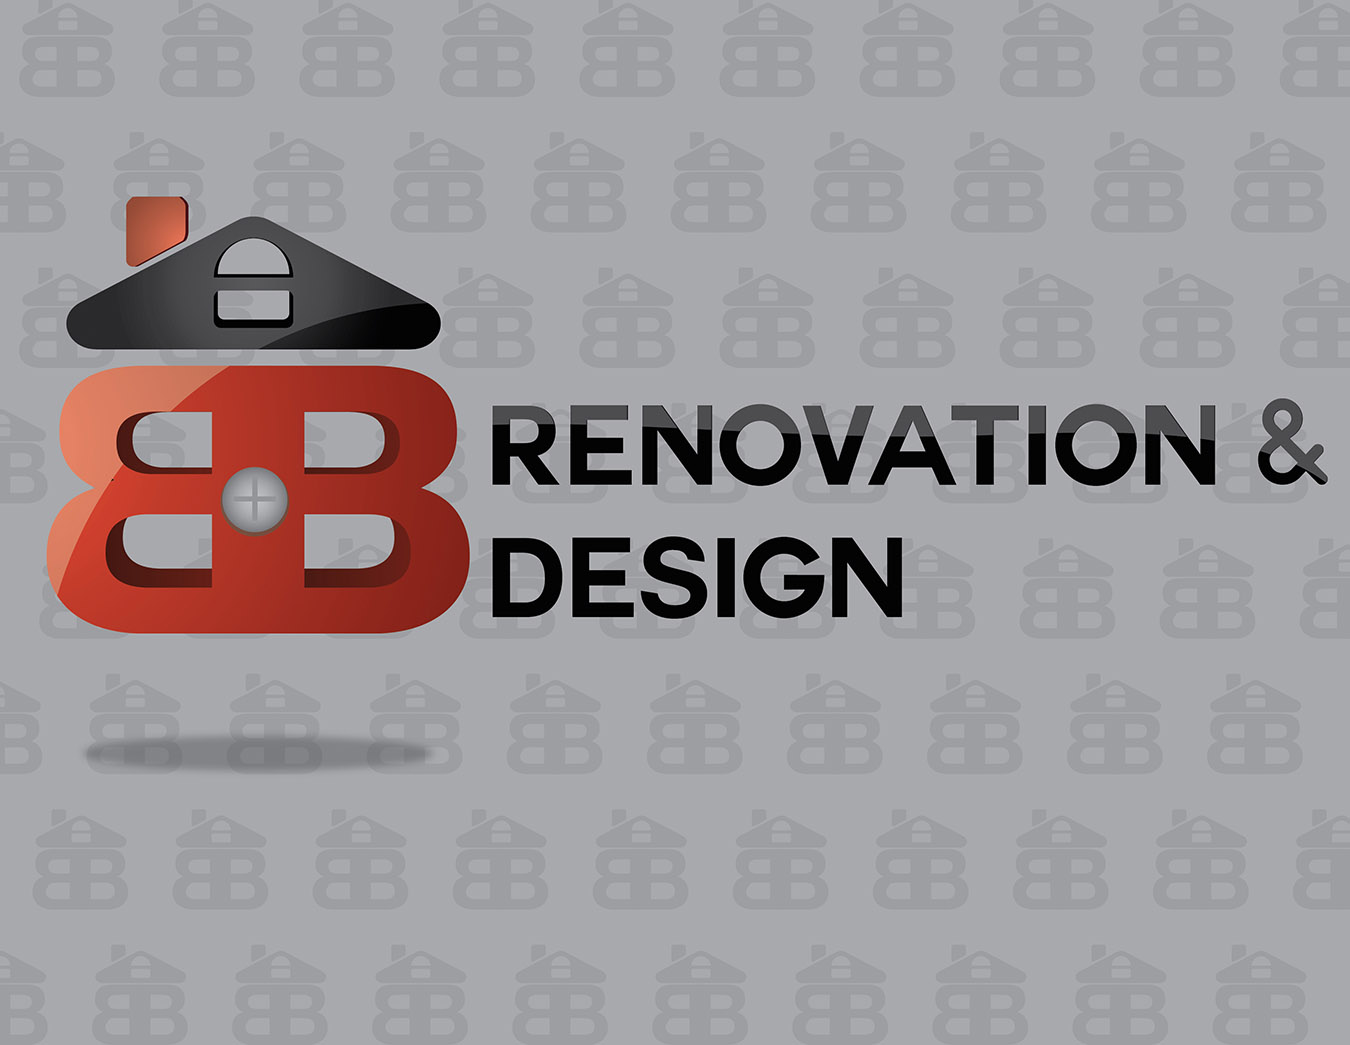 B+B Renovation & Design